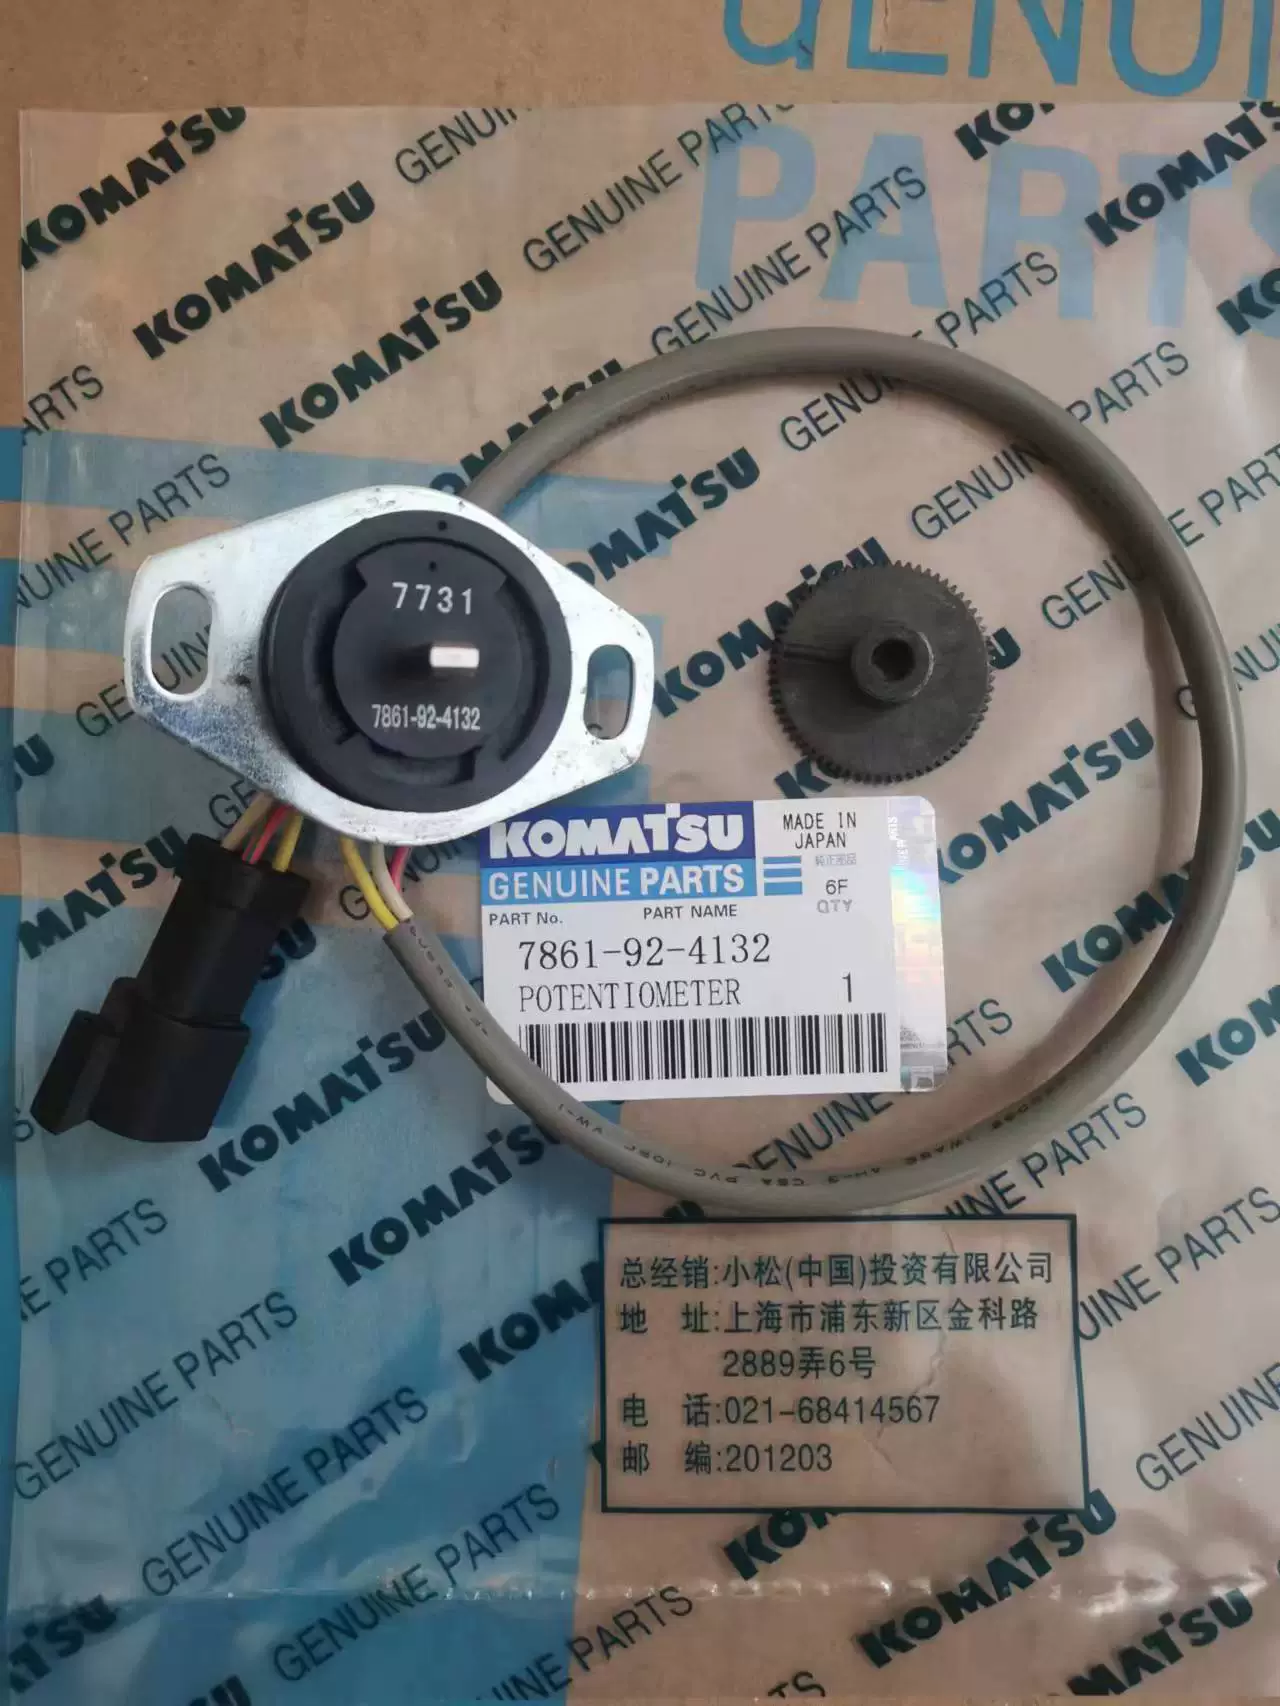 PC130/200/300/360-7 Komatsu motor positioner 7861-92-4132 potentiometer